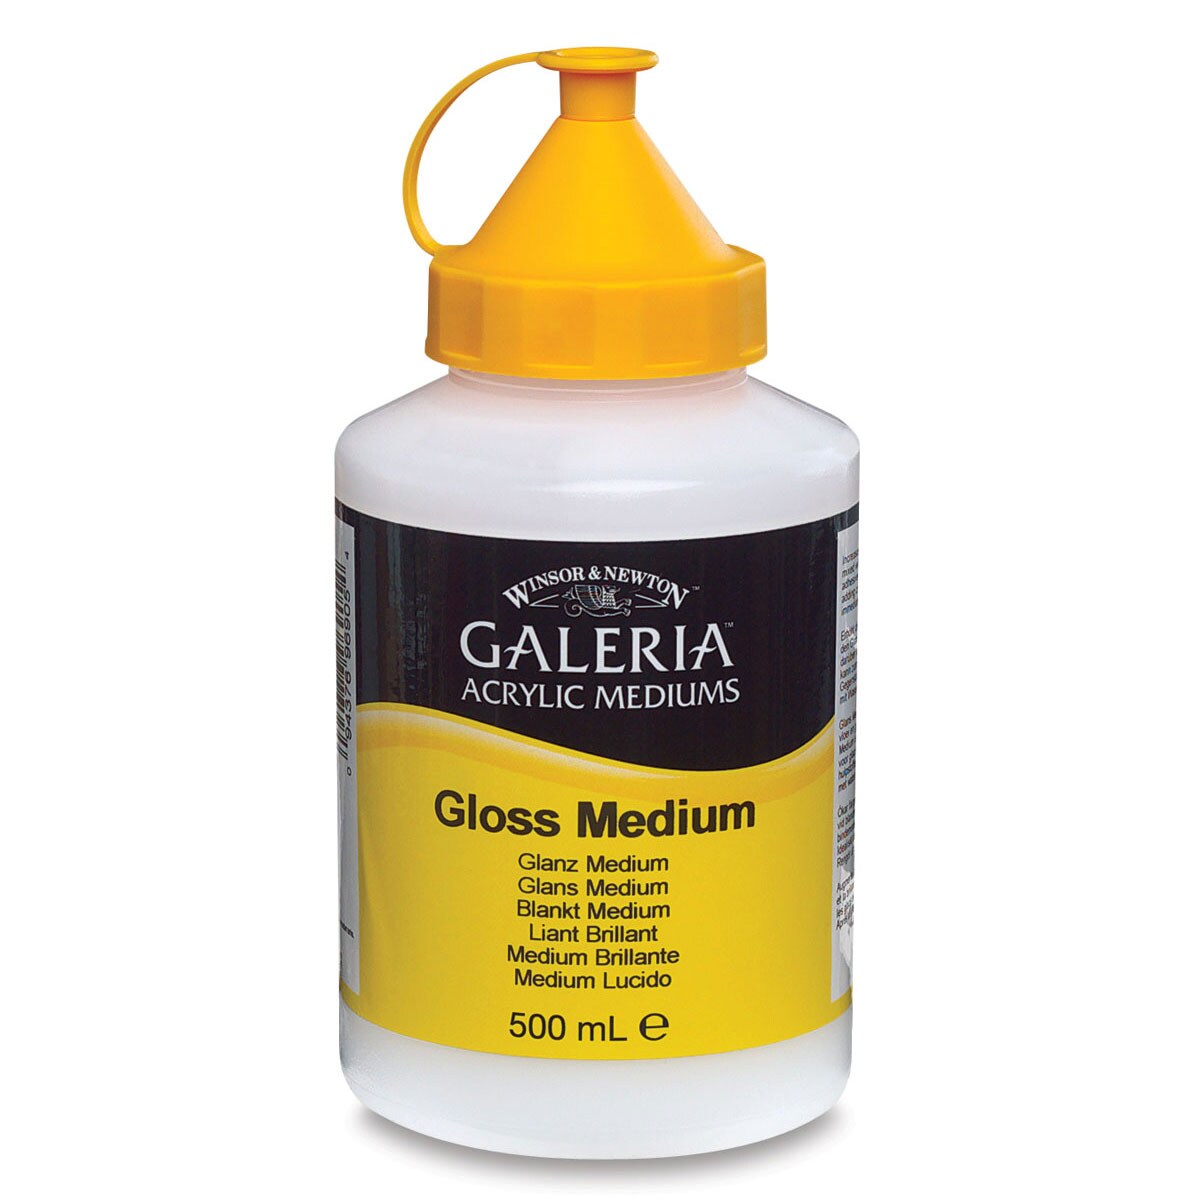 Winsor &#x26; Newton Galeria Acrylic Medium - Gloss, 500 ml bottle